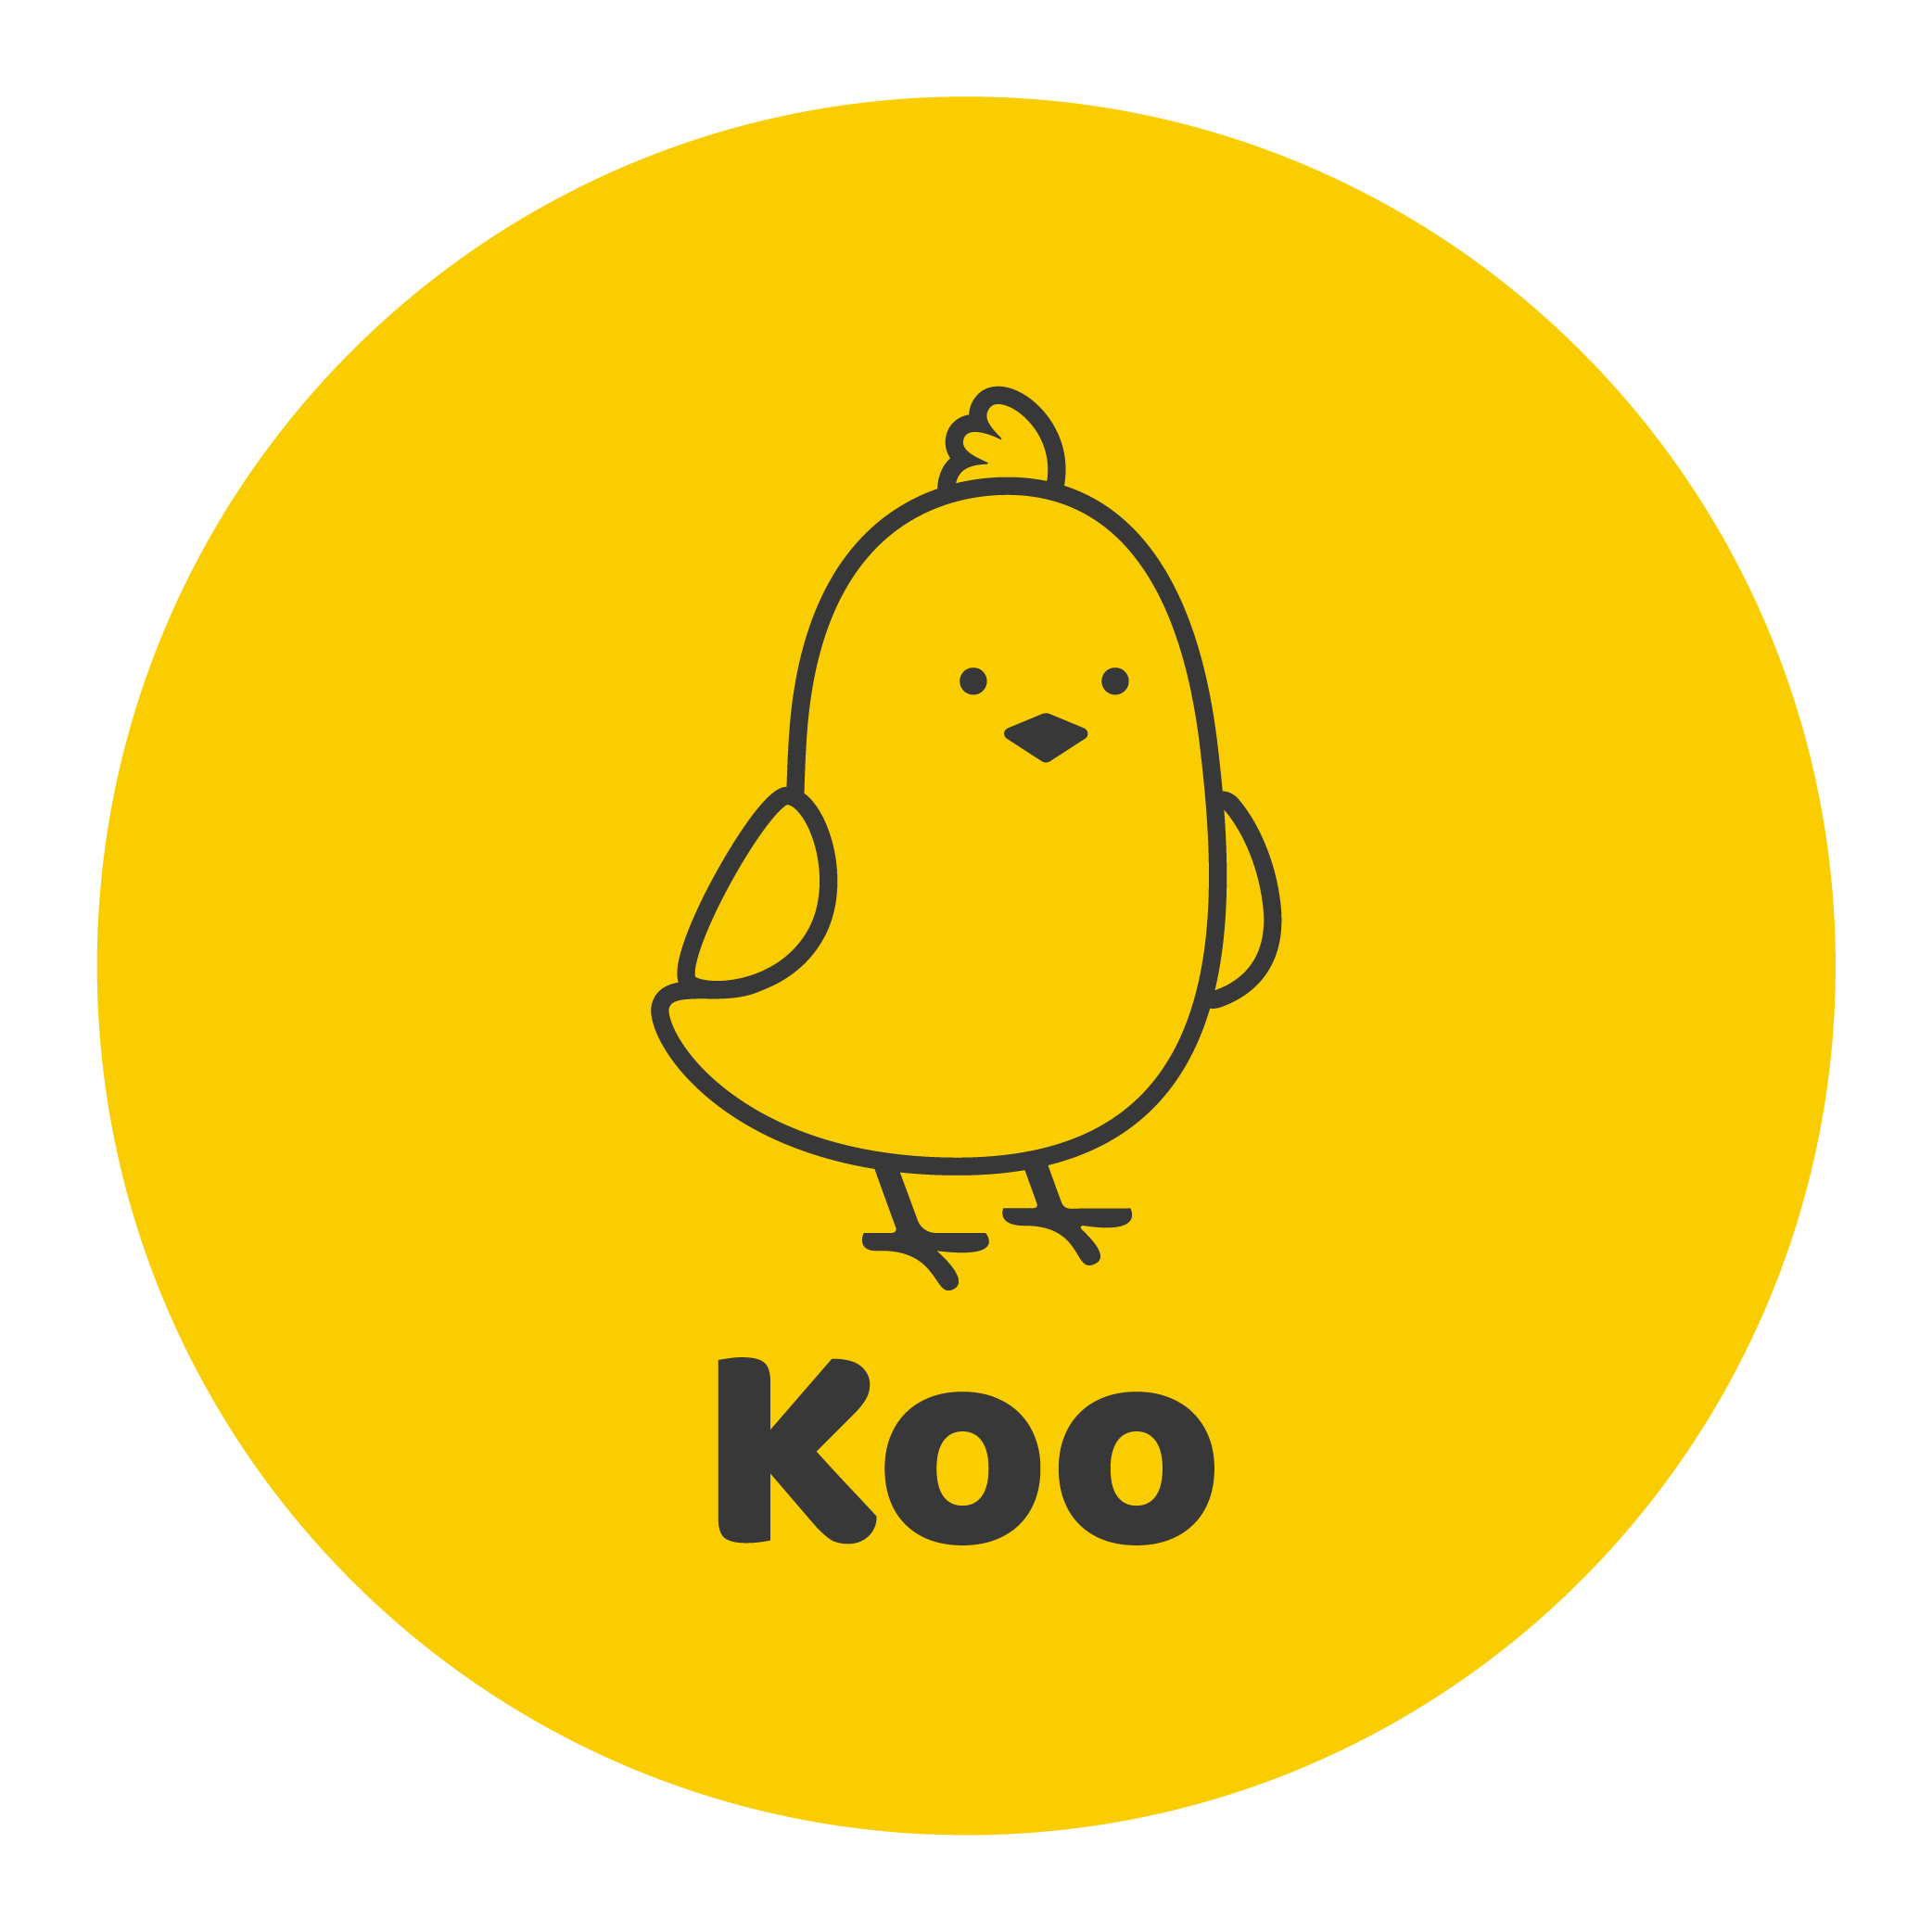 Koo App New Logo Unveiled By Gurudev Sri Sri Ravi Shankar Koo App